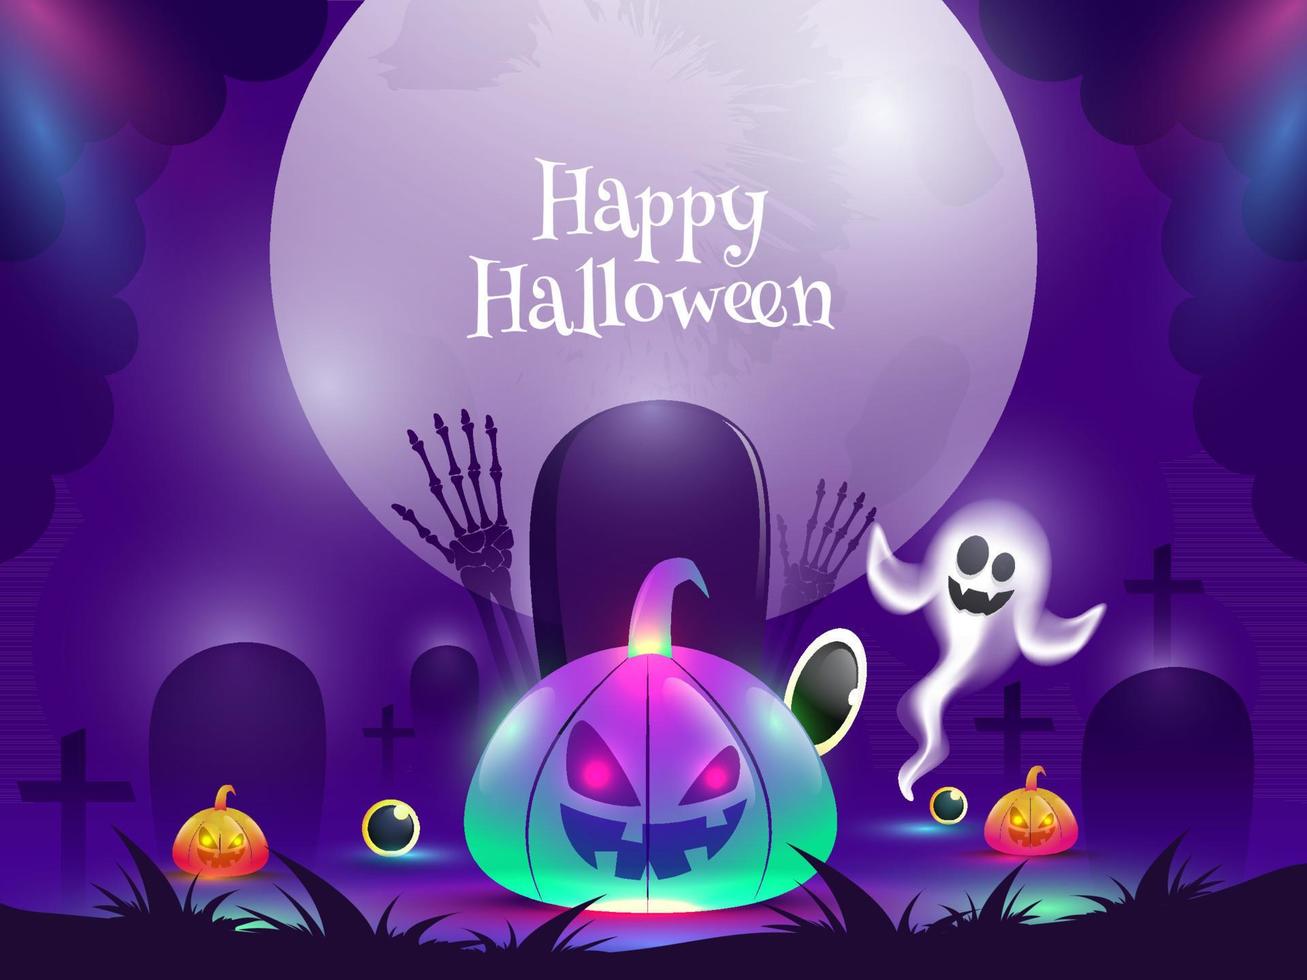 Gradient Light Effect Jack-O-Lanterns with Cartoon Ghost, Eyeballs, Skeleton Hands and Graveyard on Full Moon Purple Background for Happy Halloween. vector